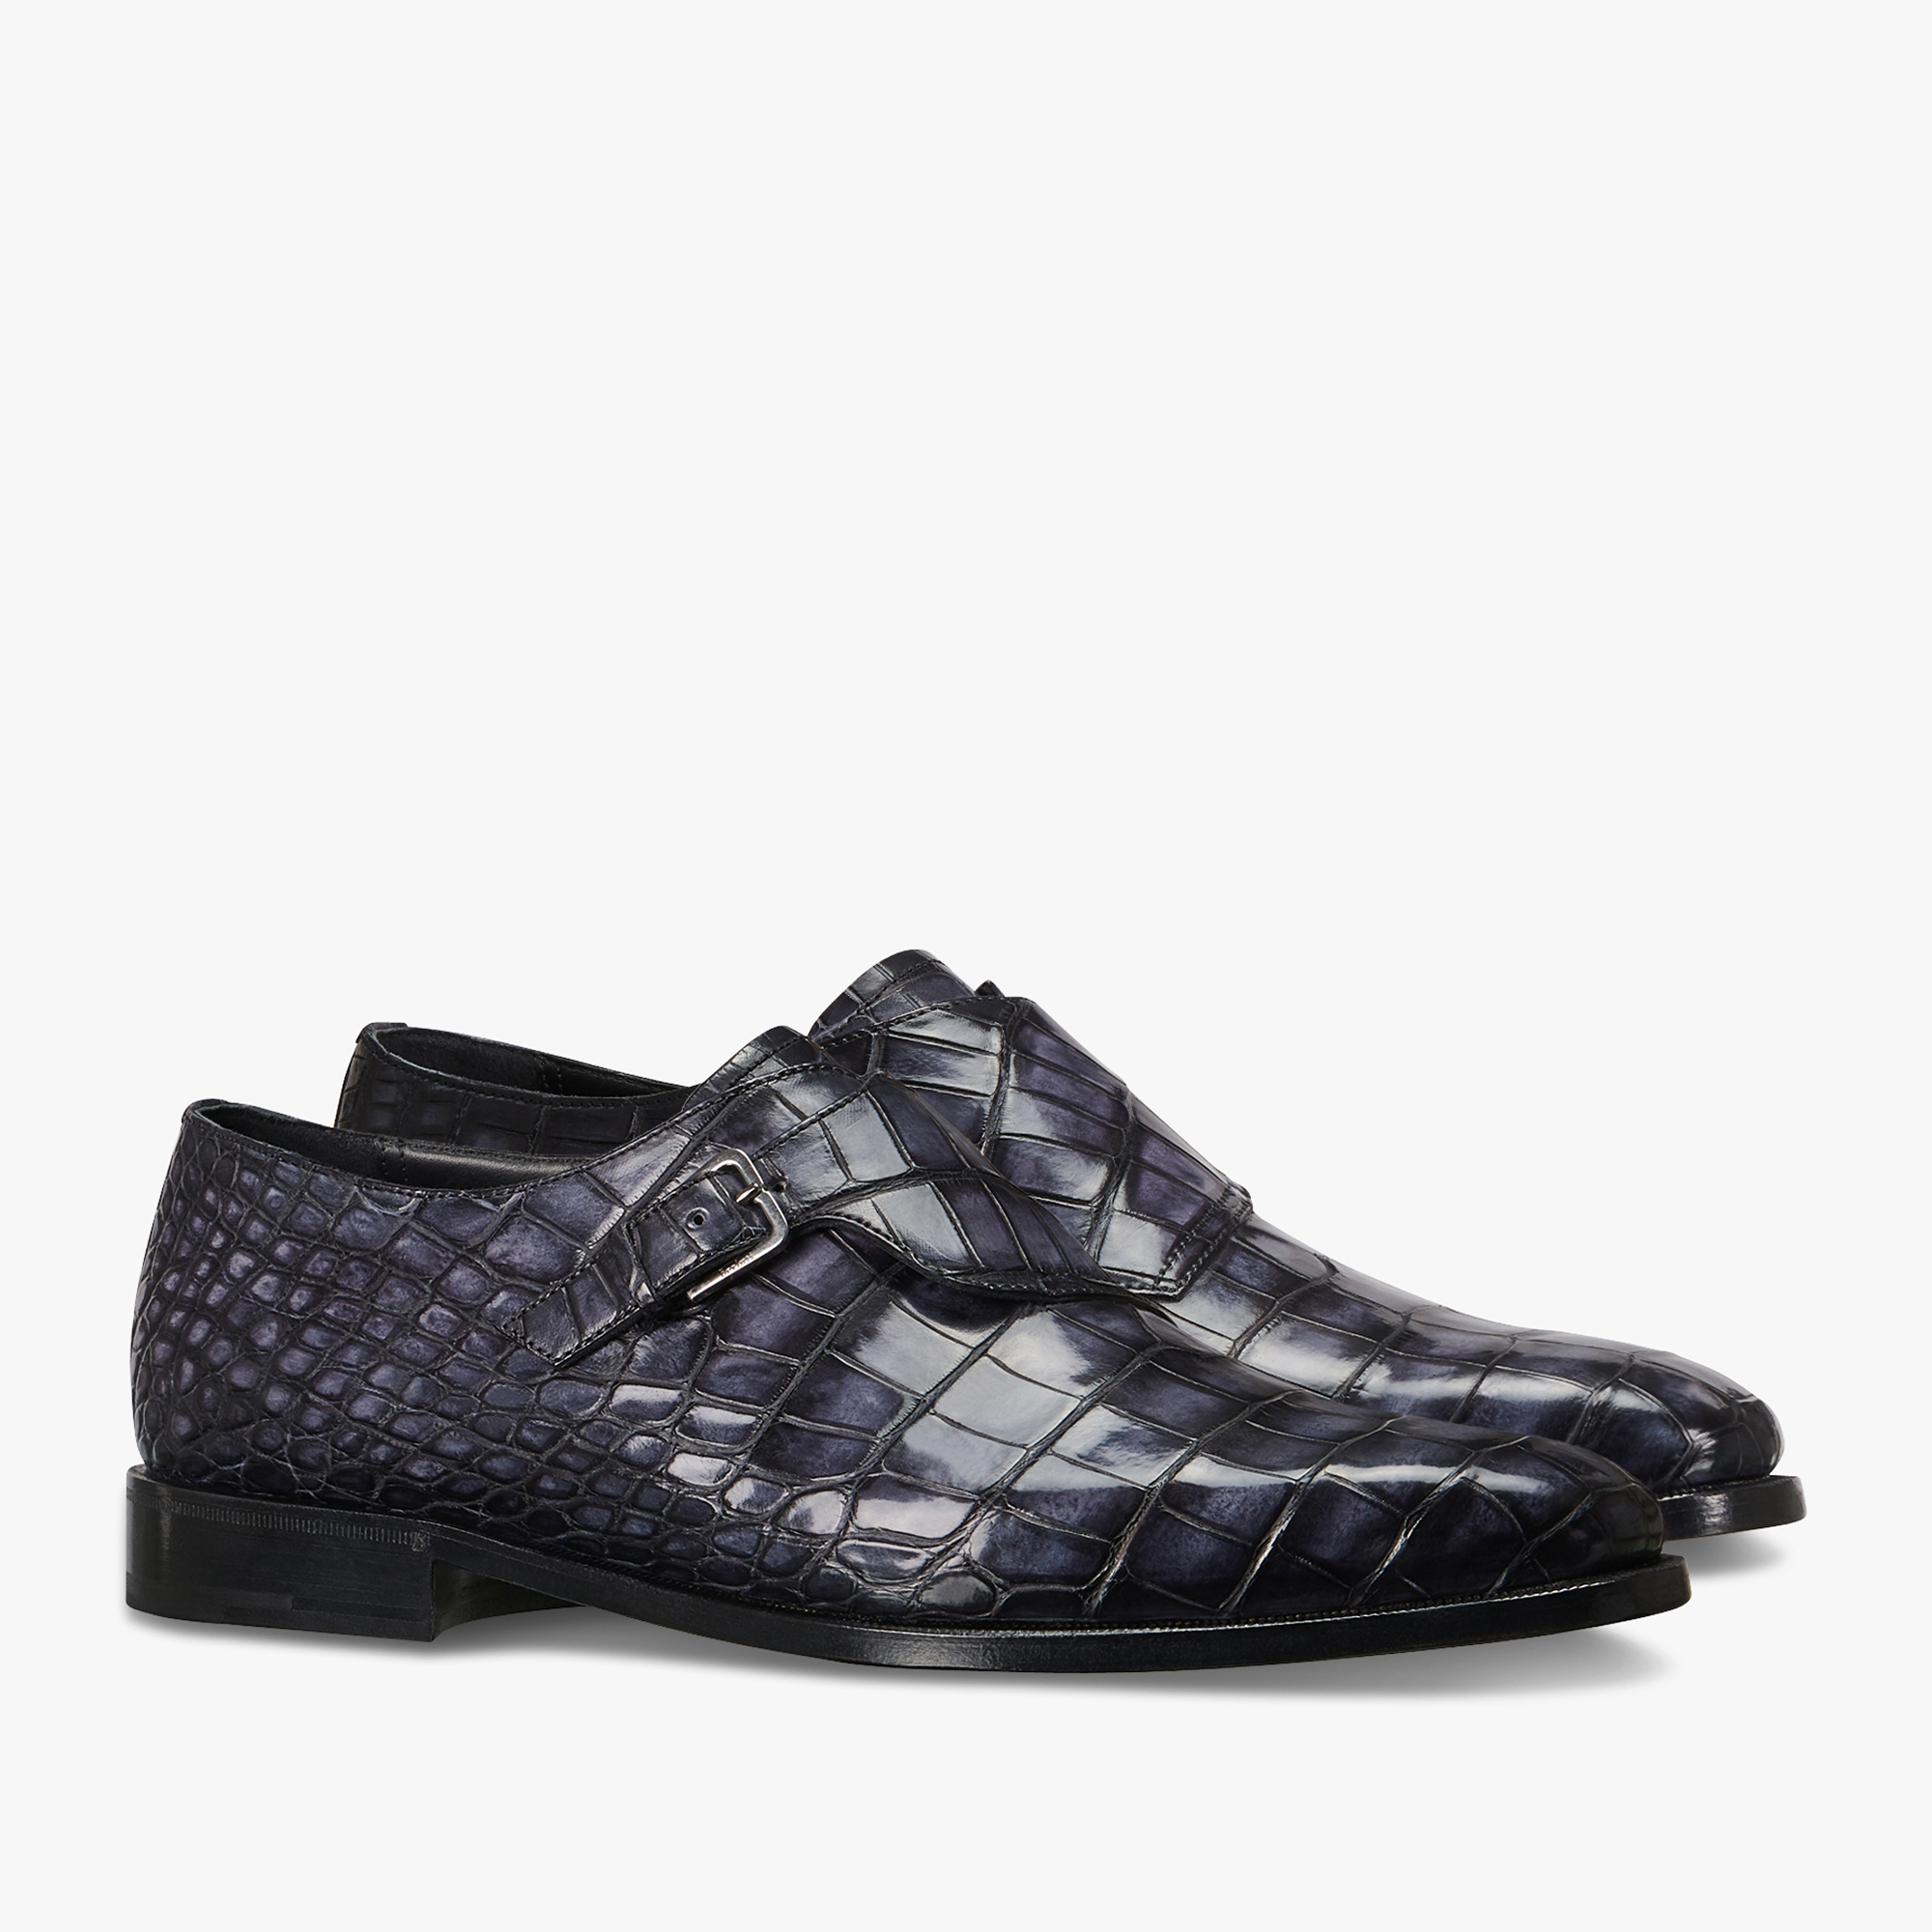 leather crocodile shoes